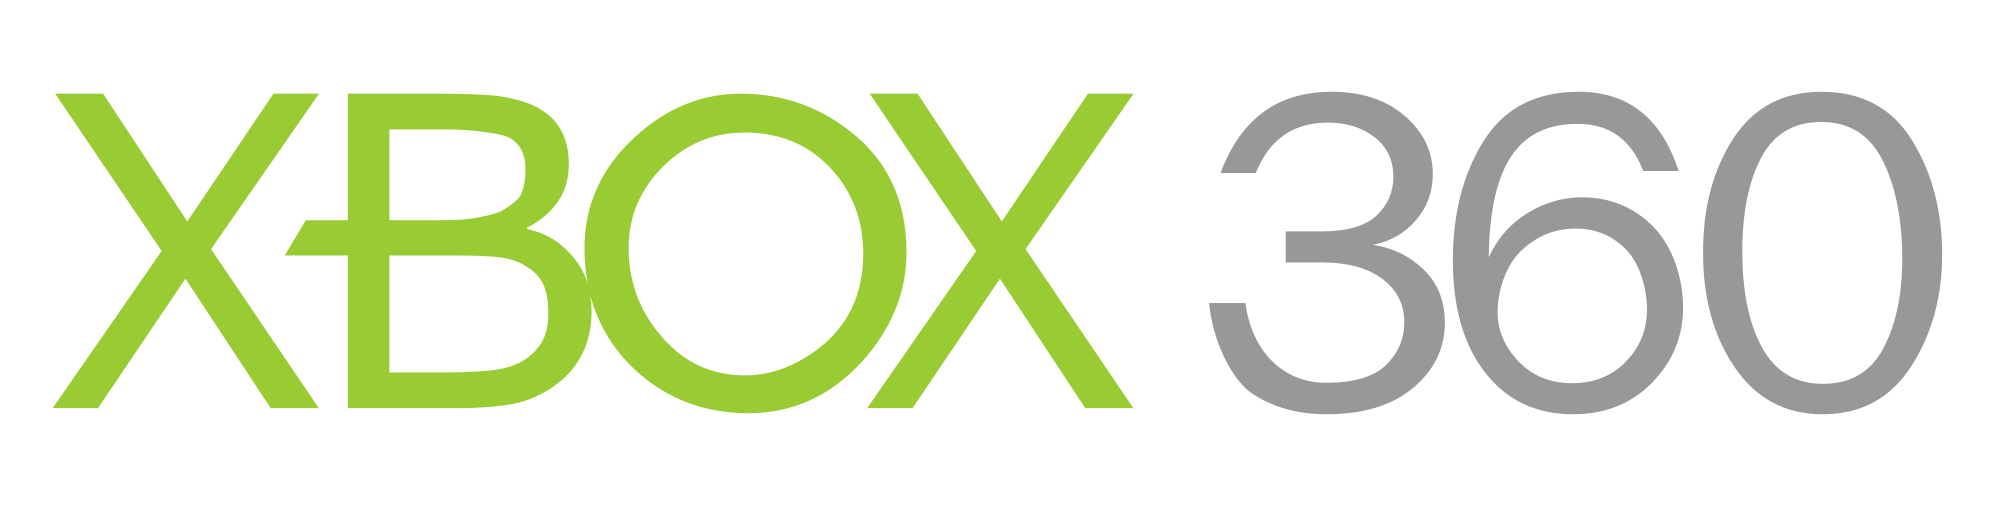 Xbox Live Logo - File:Xbox 360 logo.svg - Wikimedia Commons